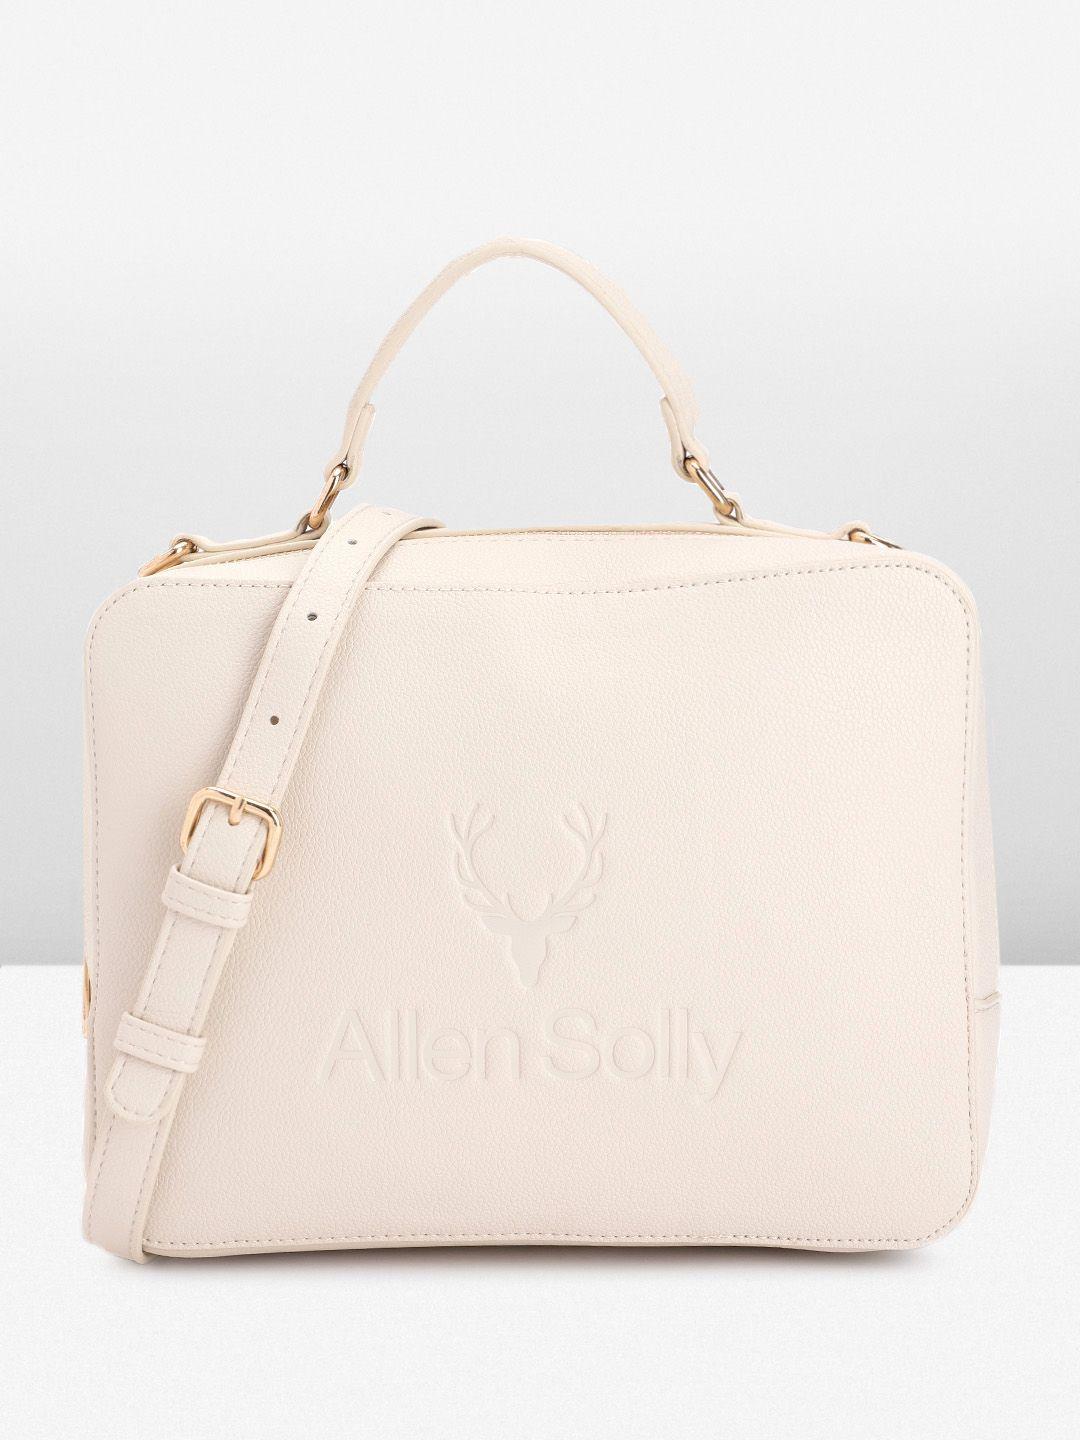 allen solly brand logo debossed design handheld bag